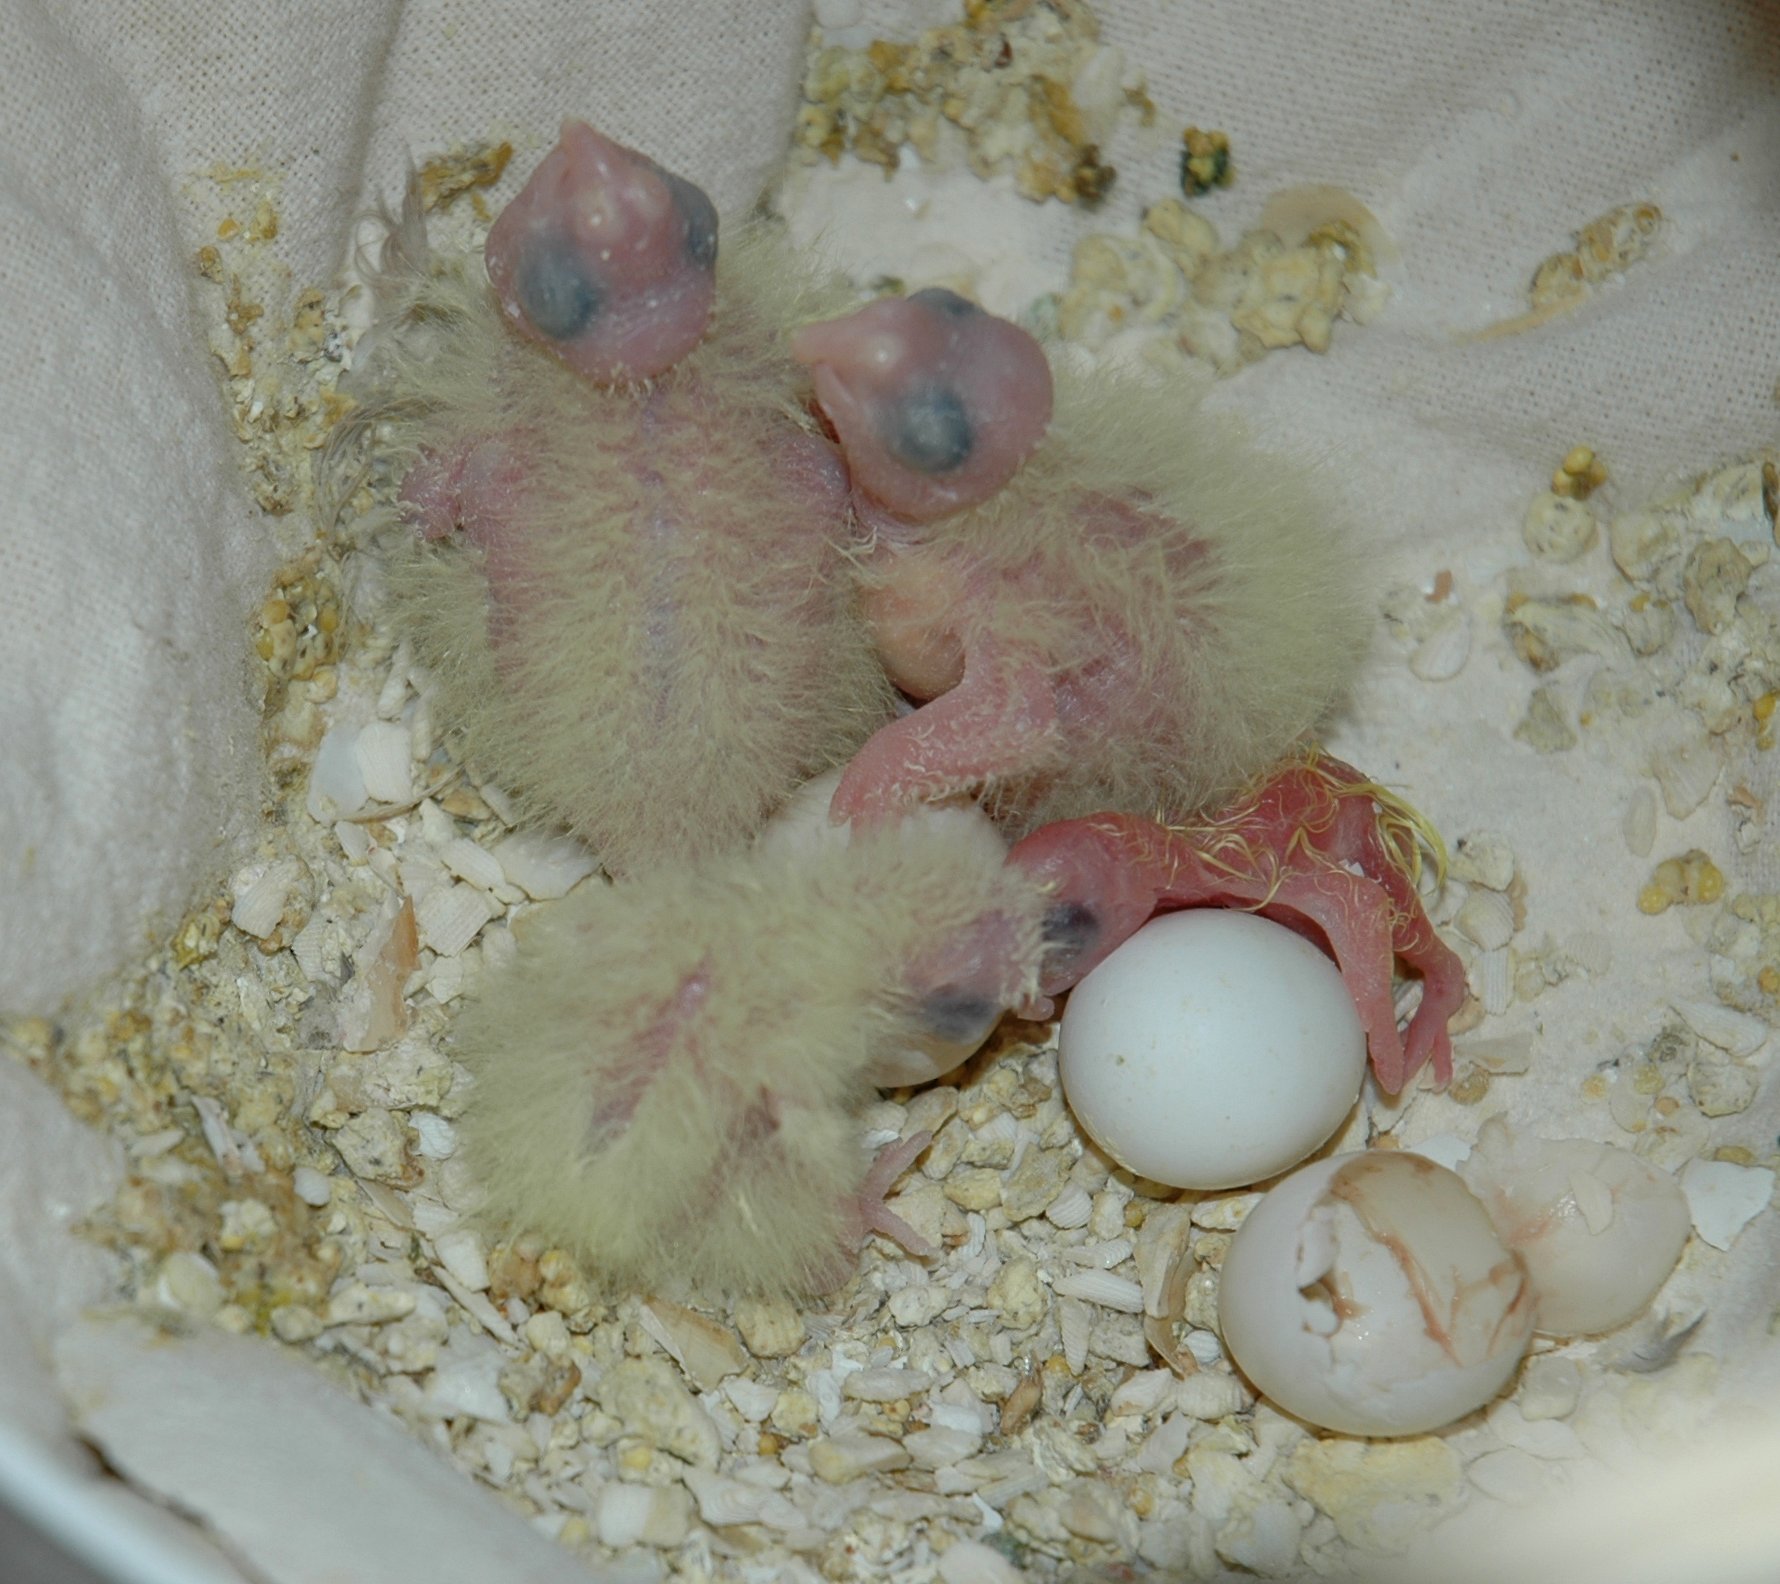 Baby Cockatiels with Newborn DSC_3318.JPG